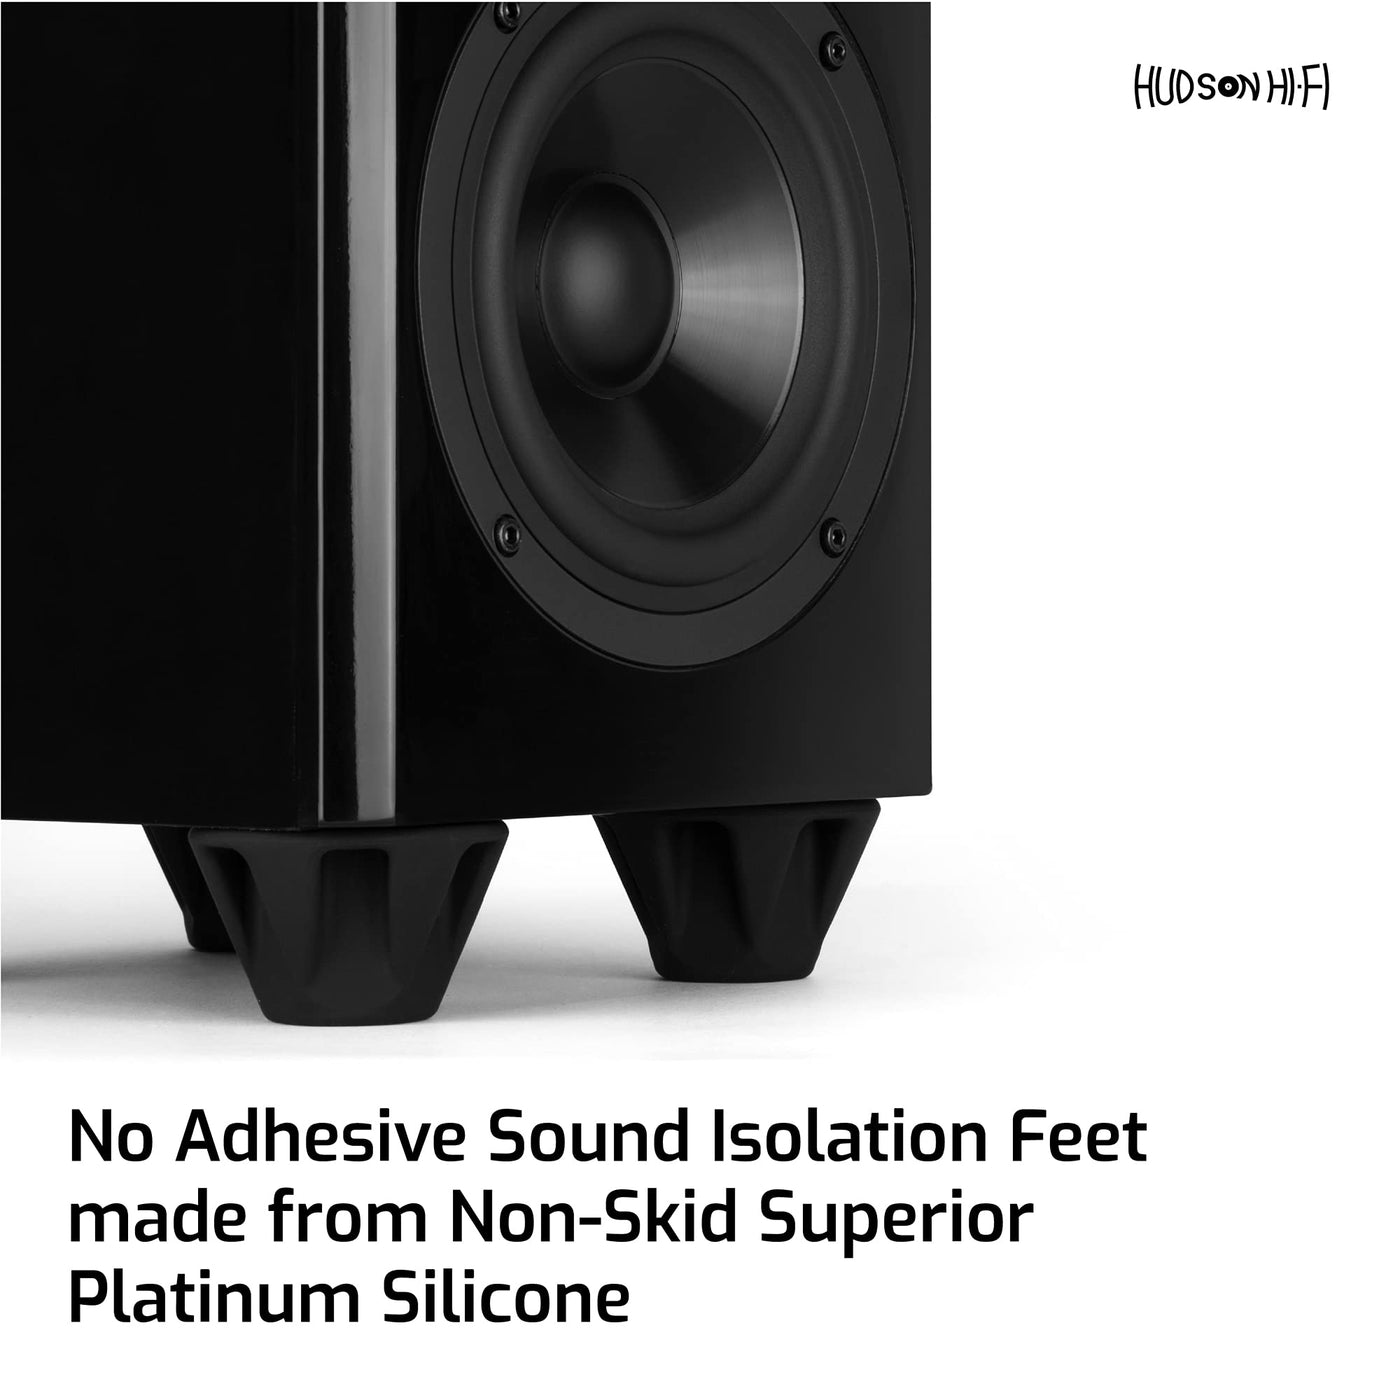 Hudson Hi-Fi Big Foot 1.5” Isolation Feet - Non-Adhesive Rubber Bumpers